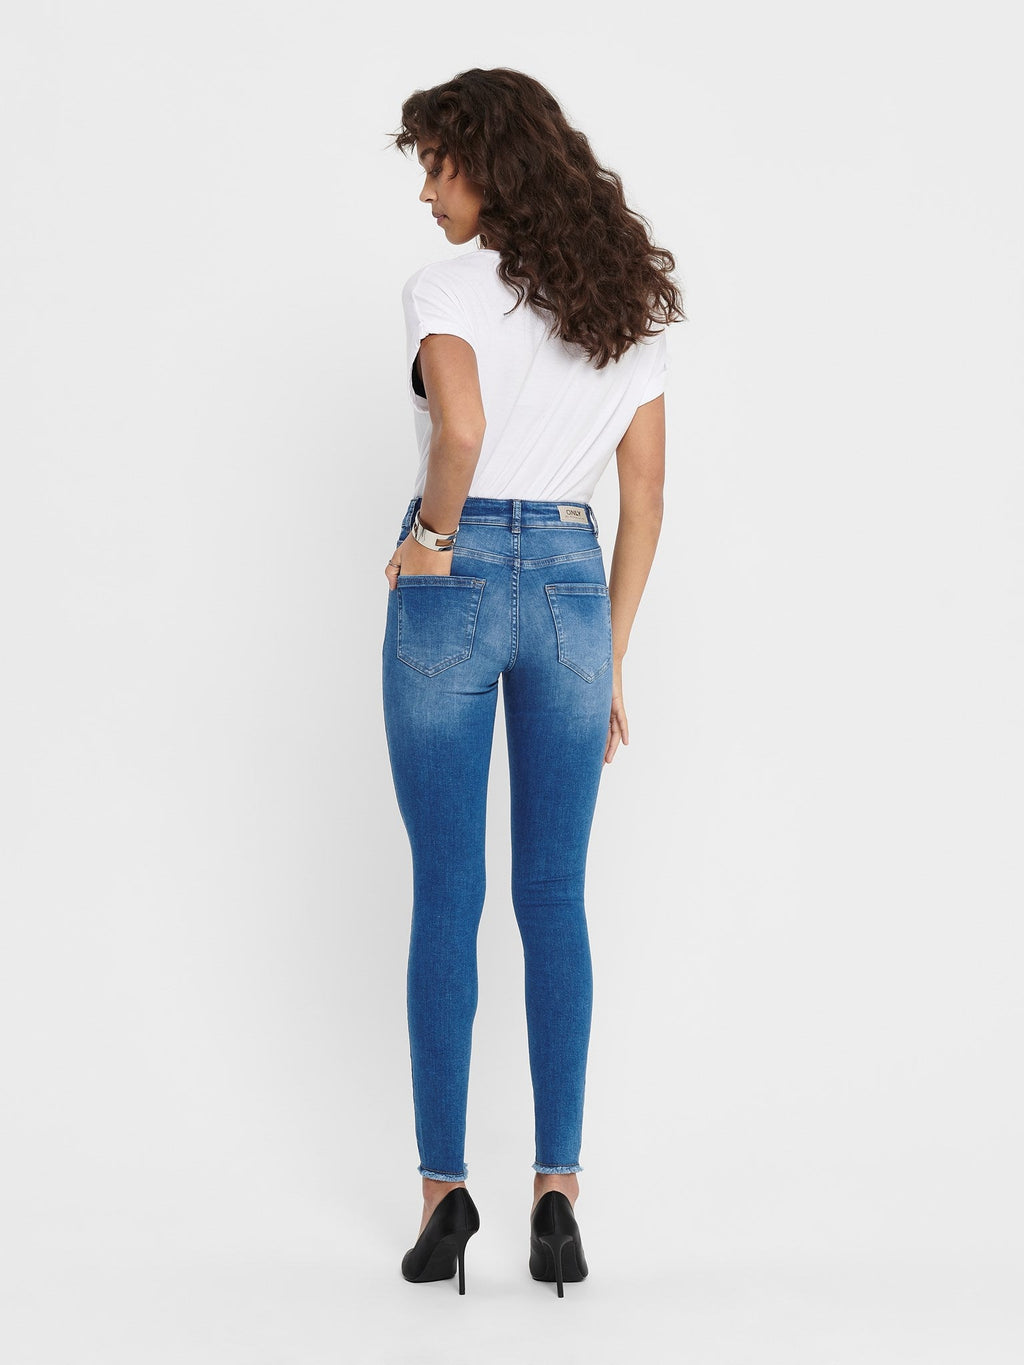 Blush Midsk Jeans - Gorm Meánach